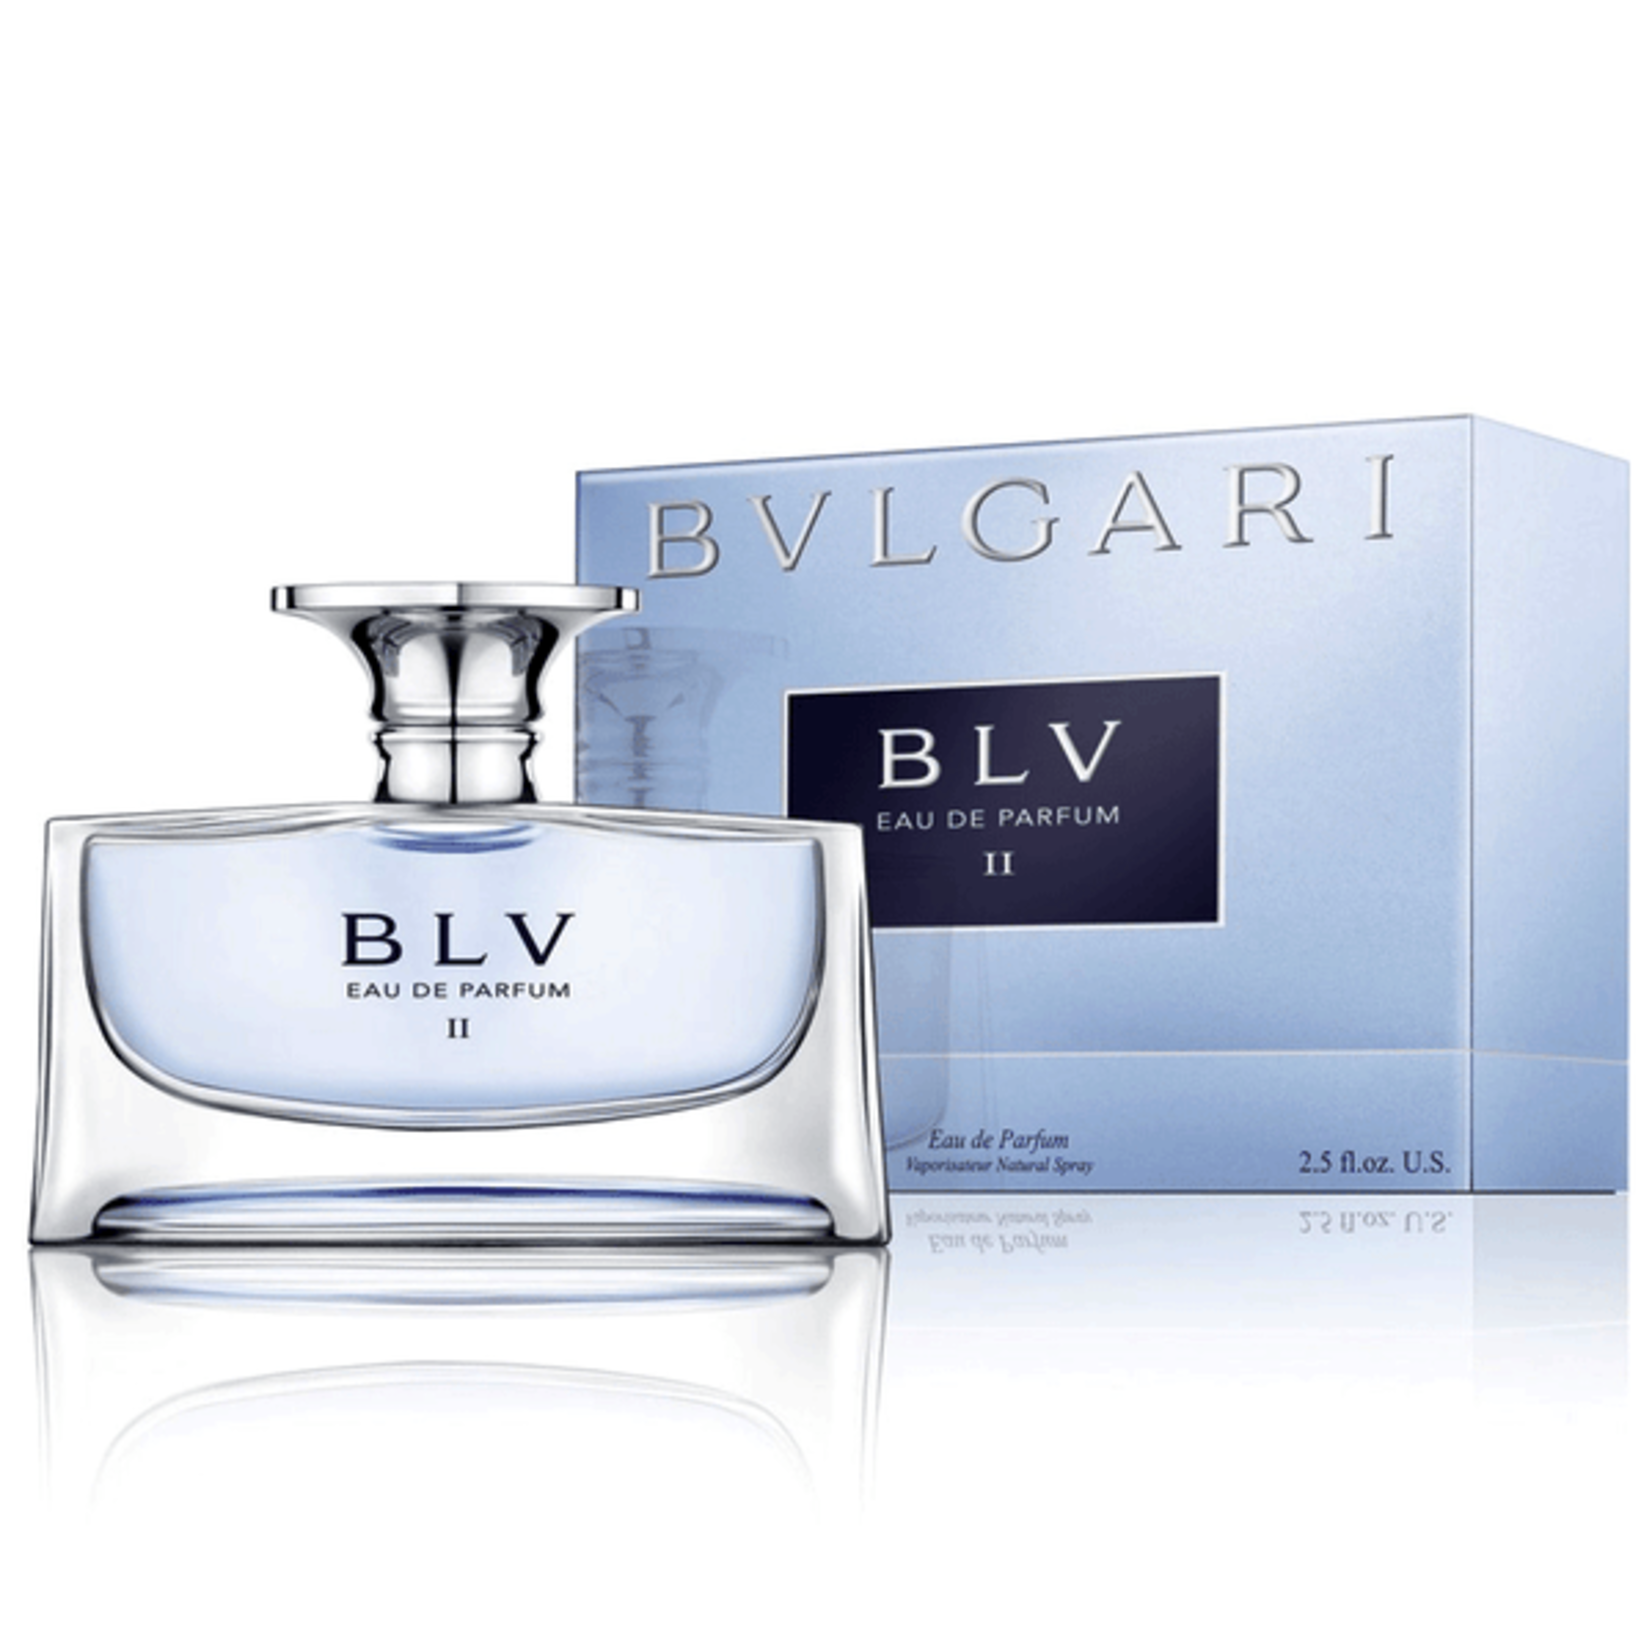 Bvlgari Bulgari BLV Eau de Parfum II